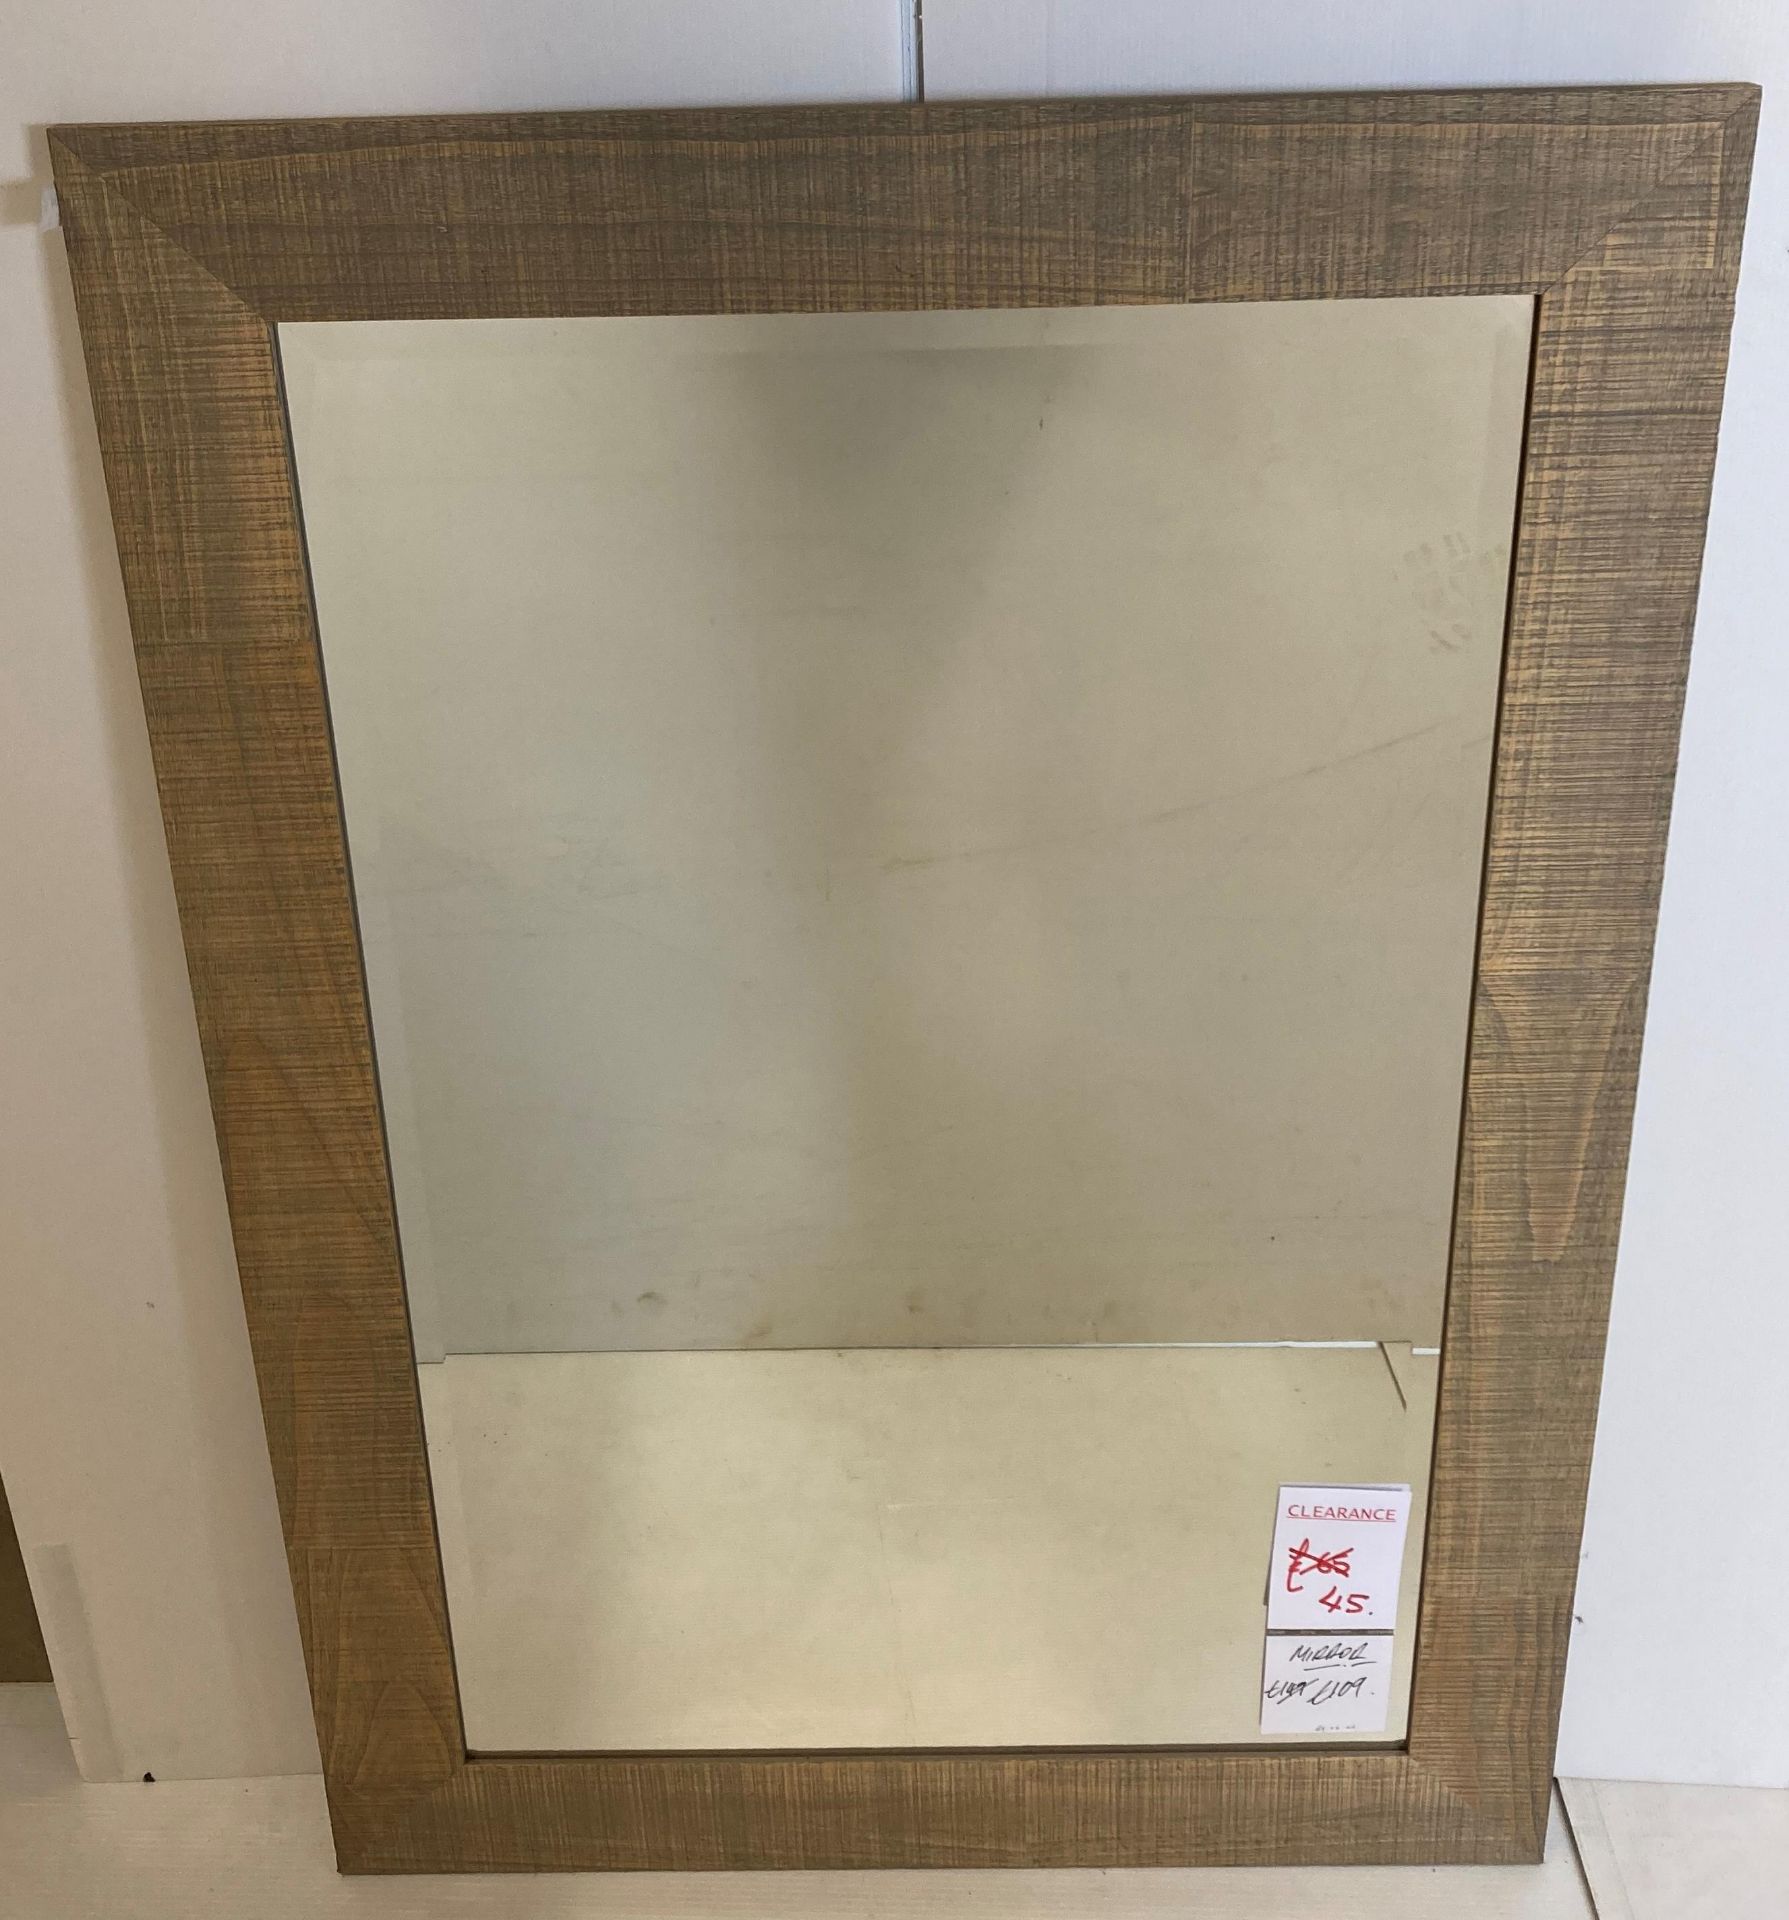 Rectangular bevelled edge wall mirror in grey wood surround,